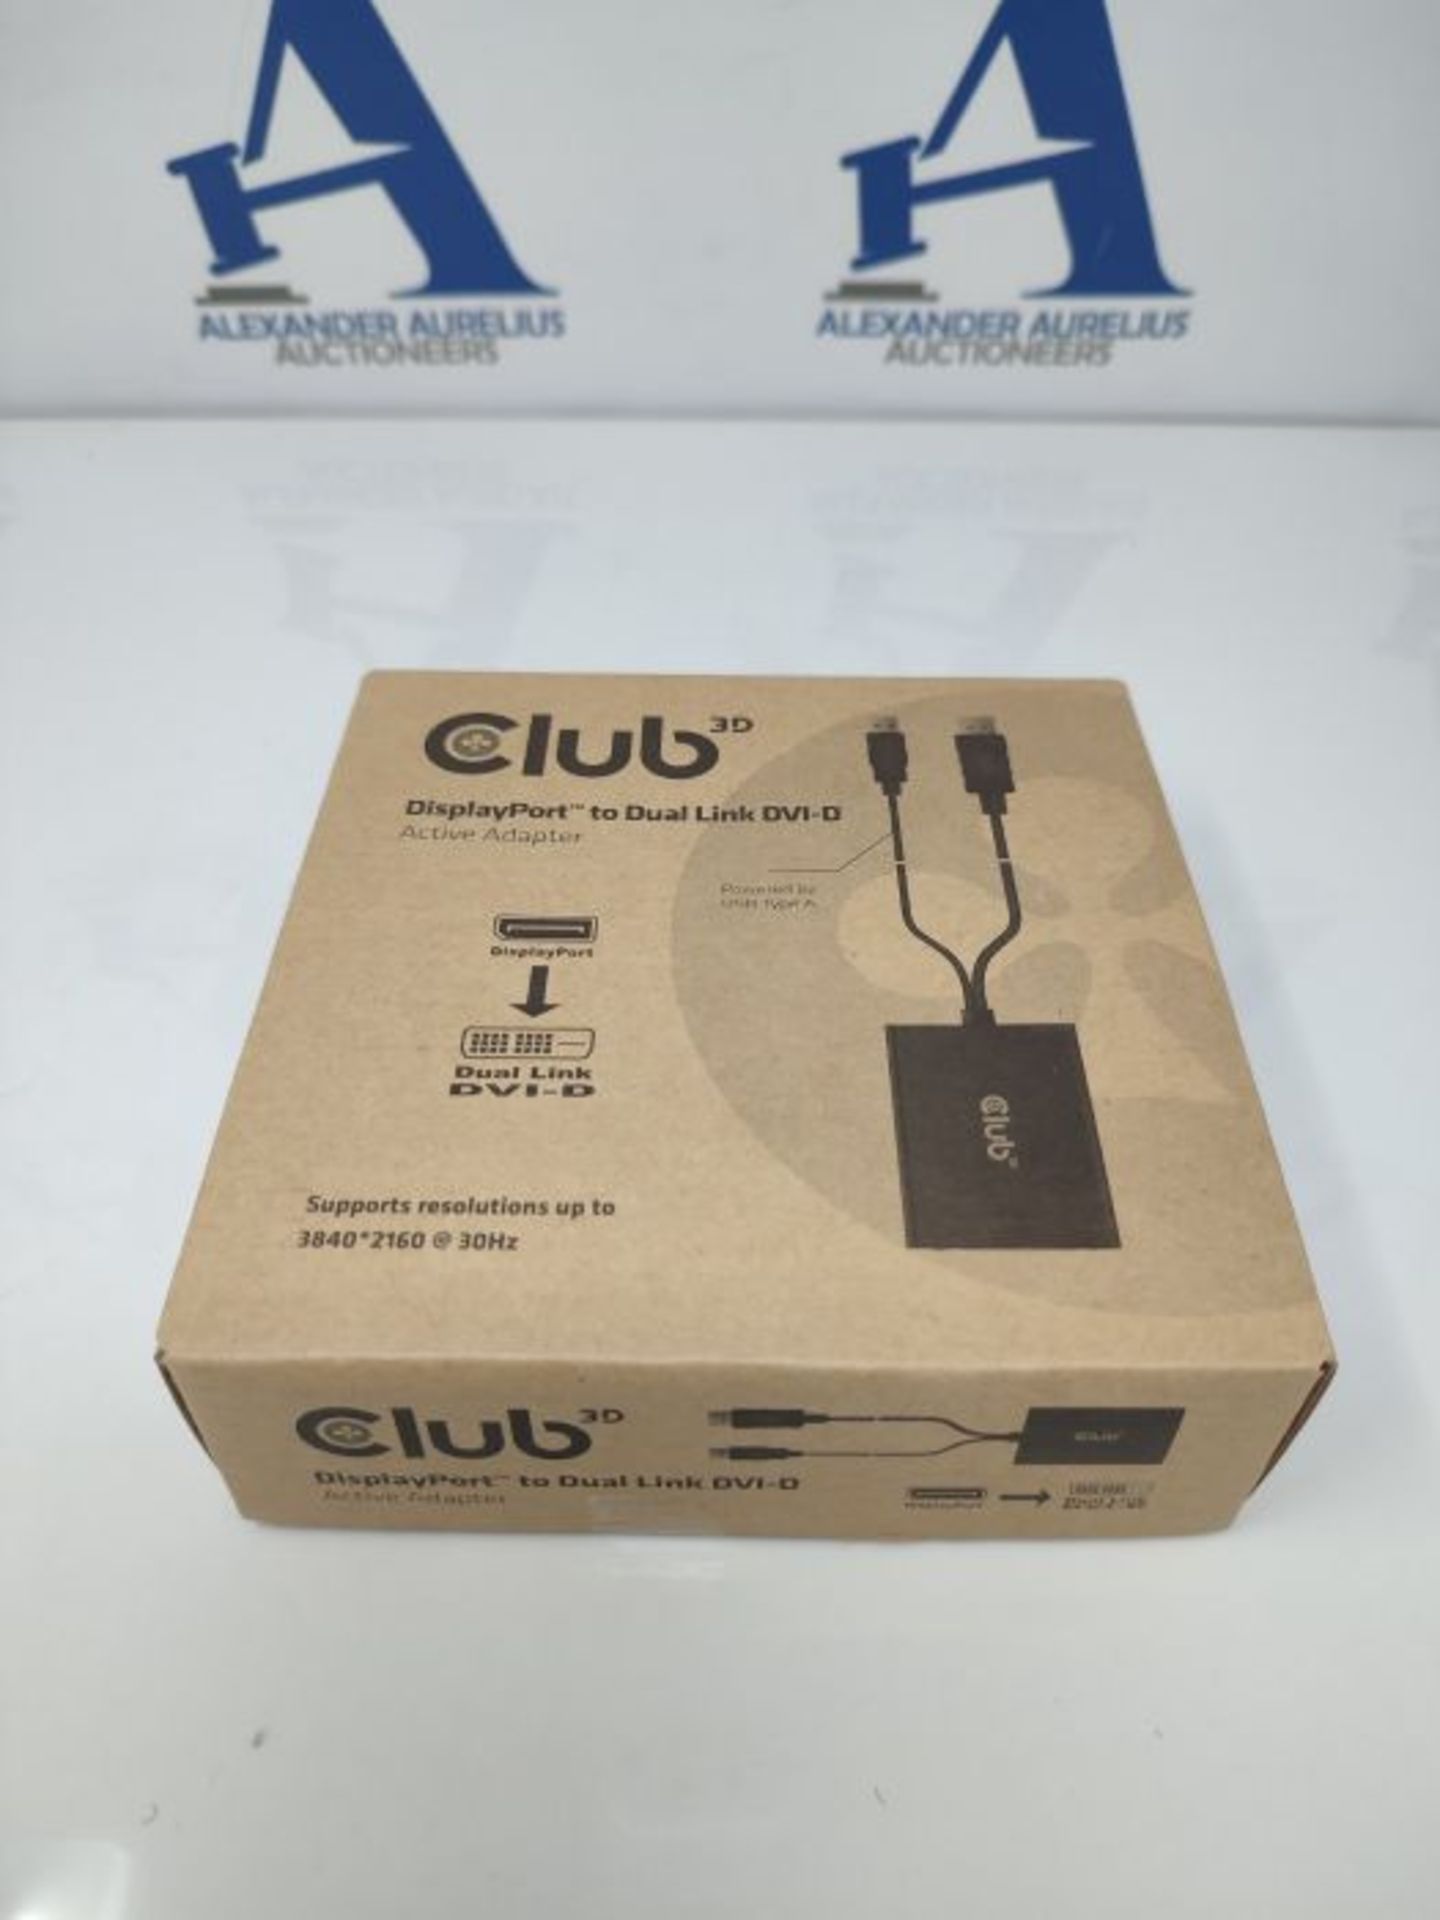 CLUB 3D CAC-1010 - Videokonverter, black - Image 2 of 3